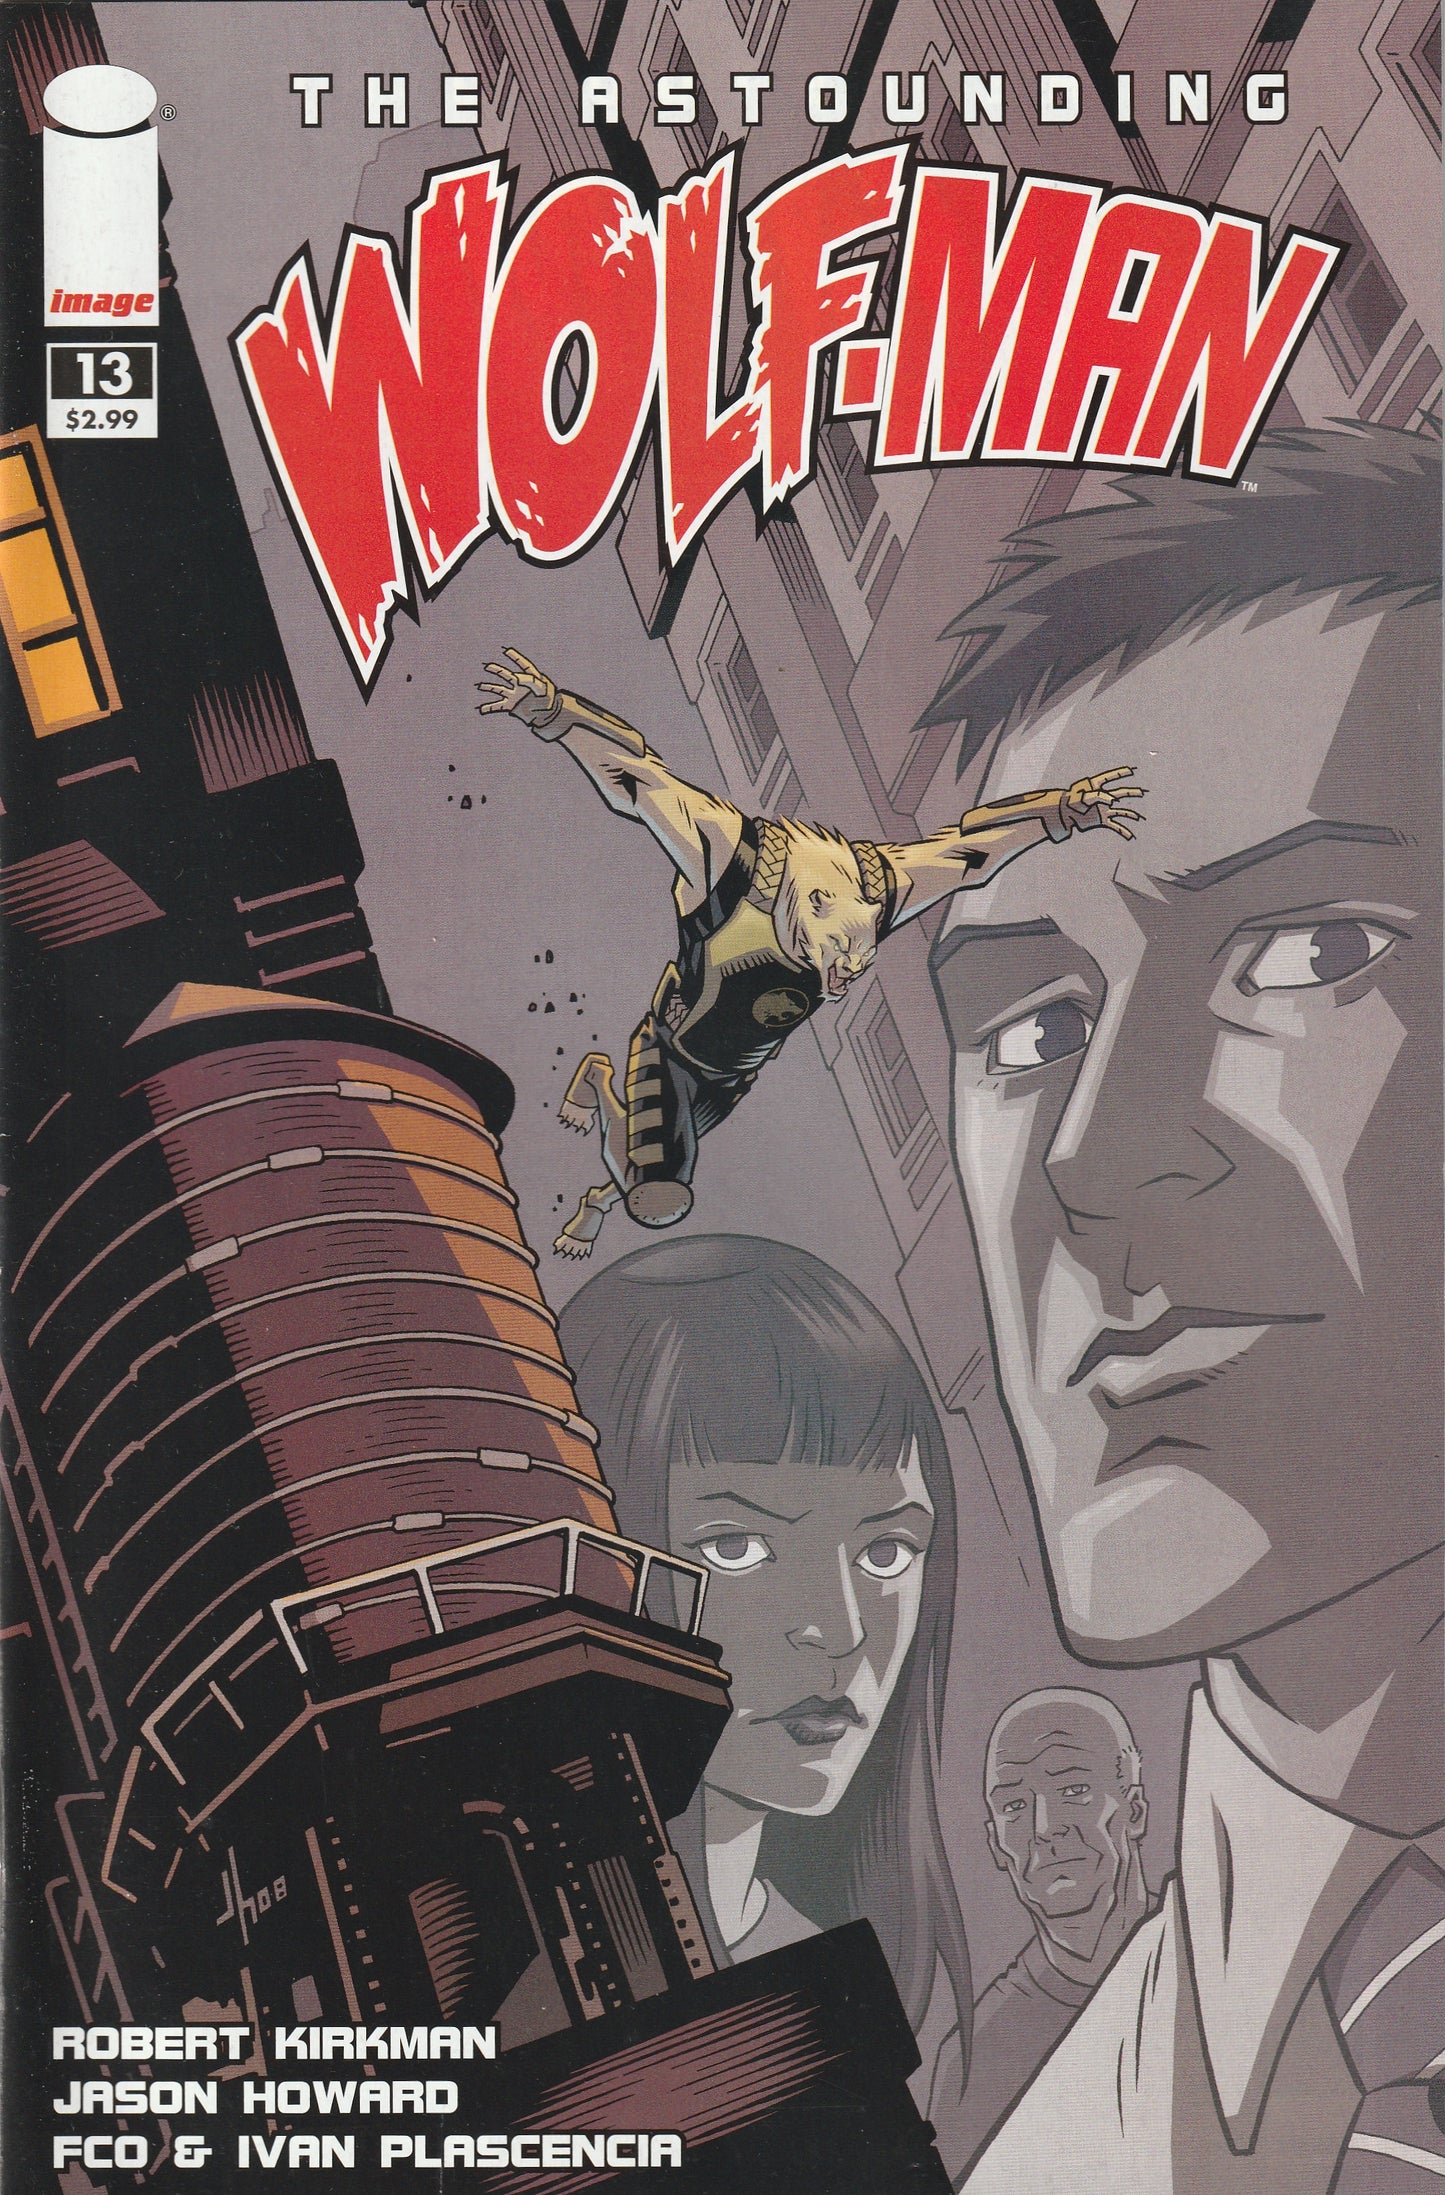 The Astounding Wolf-Man #13 (2009) - Robert Kirkman